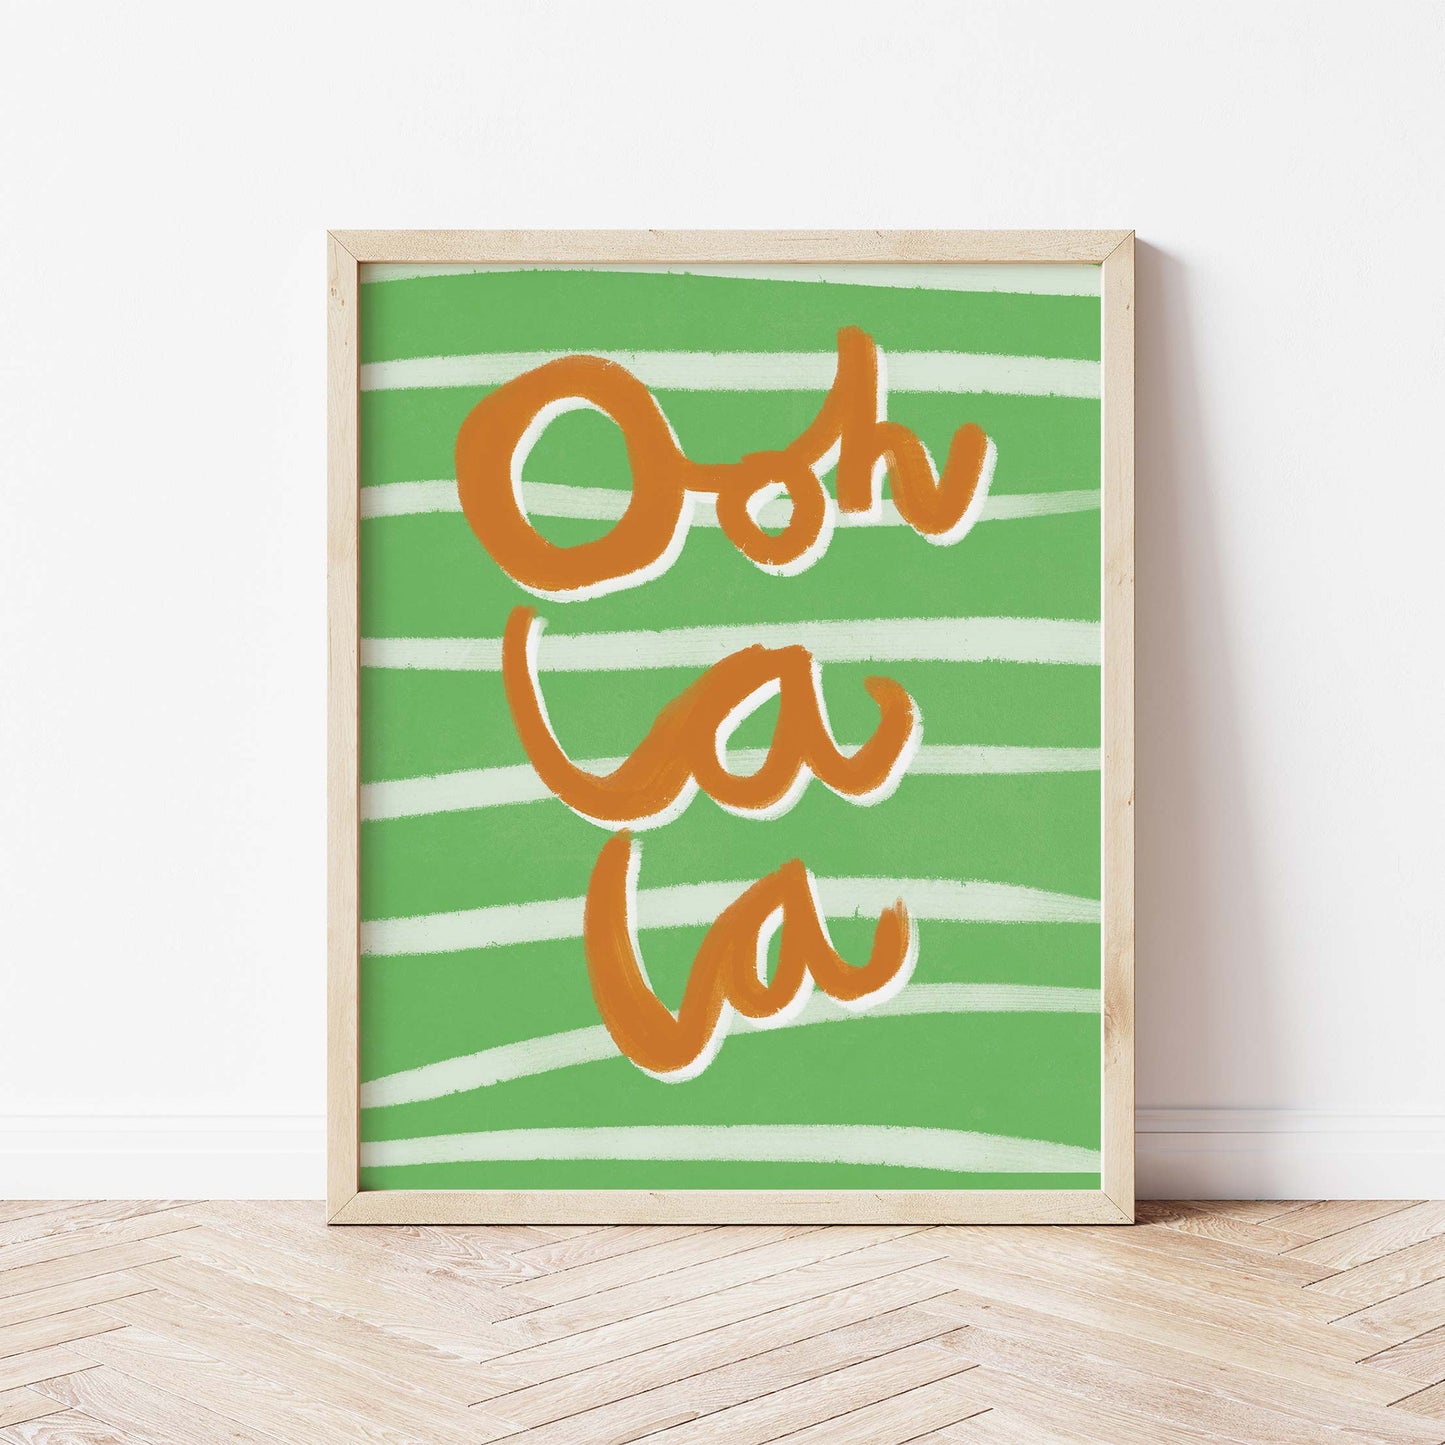 Ooh La La Art Print - Green, White and Brown Fine Art Print